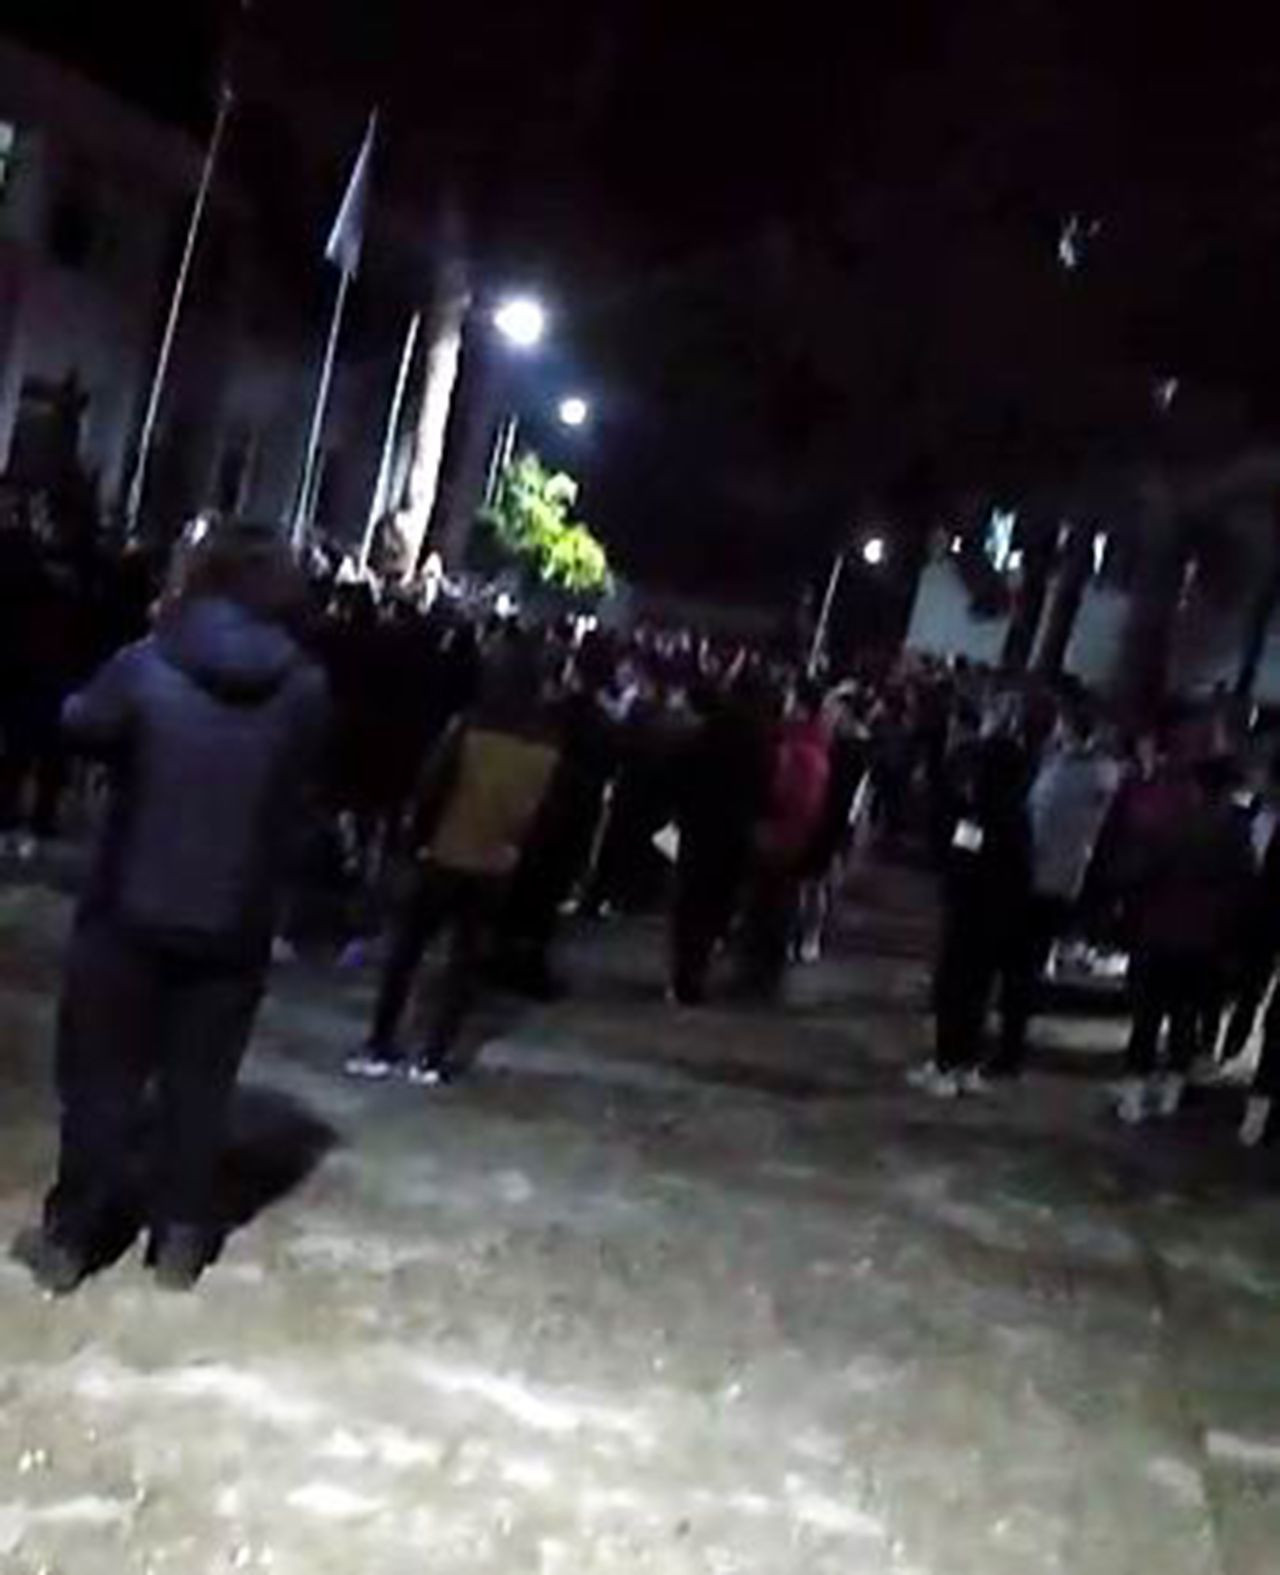 KYK yurdunda skandal! Onlarca öğrenci geceyi sokakta geçirdi - Resim: 2